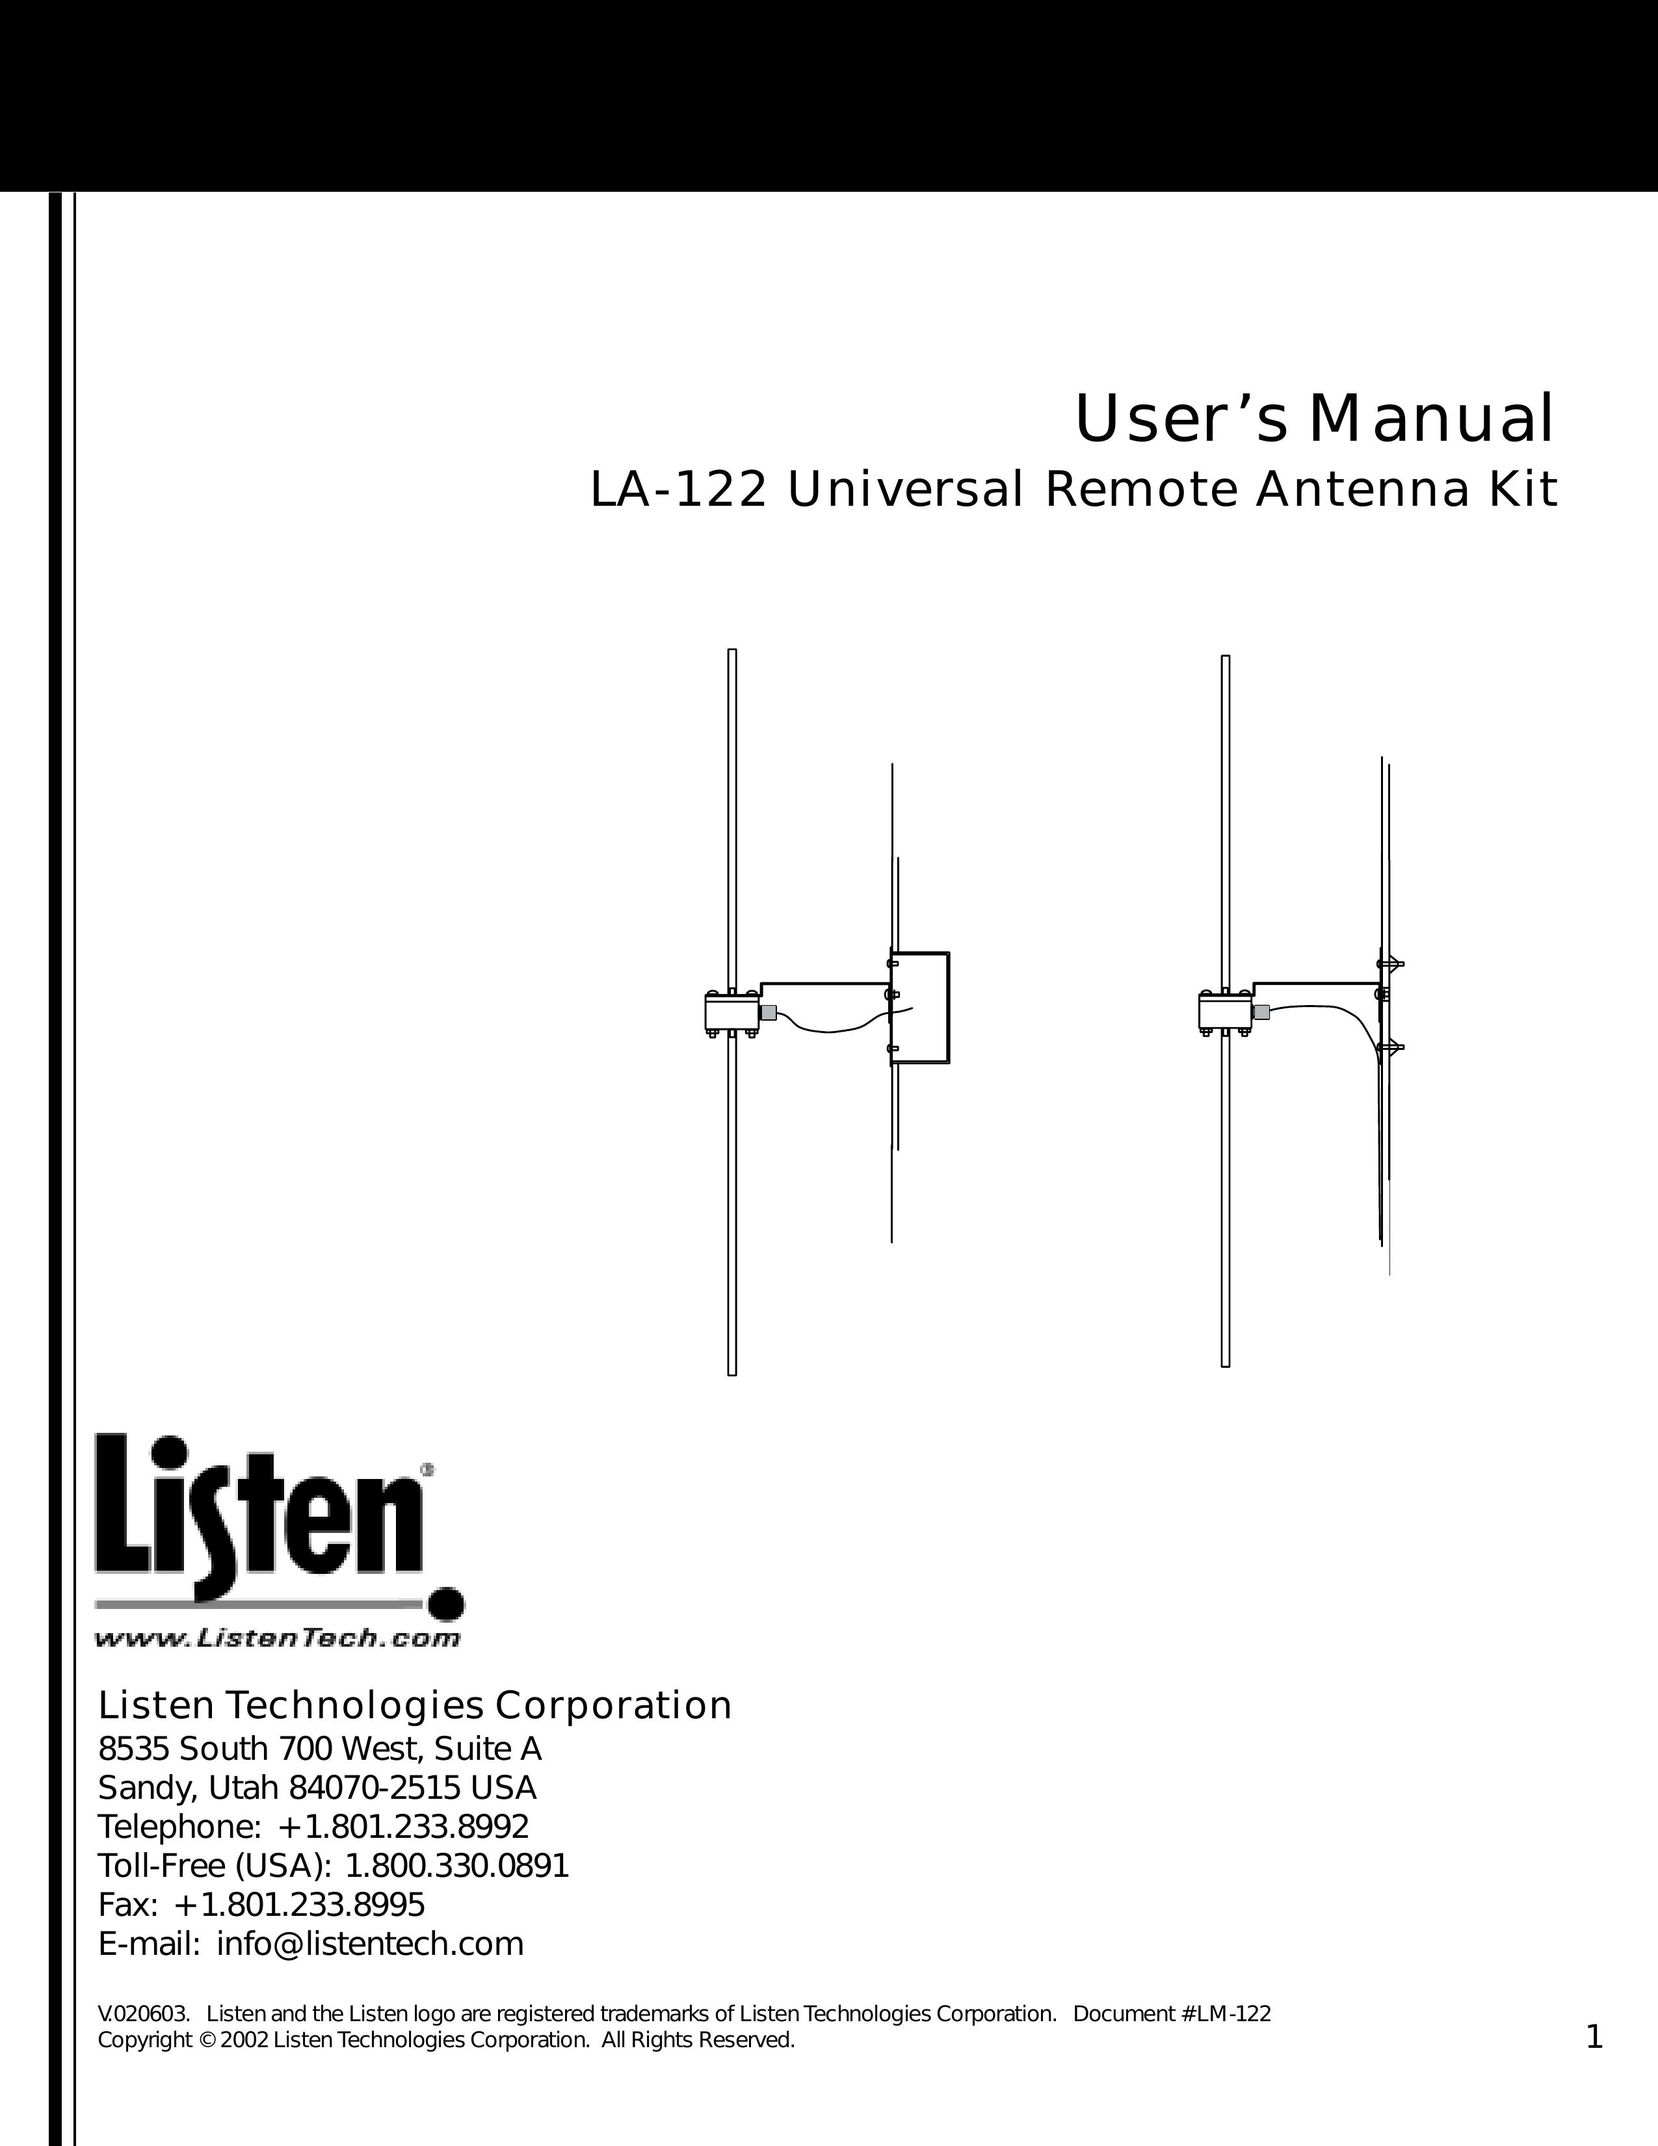 Listen Technologies LA-122 Stereo System User Manual